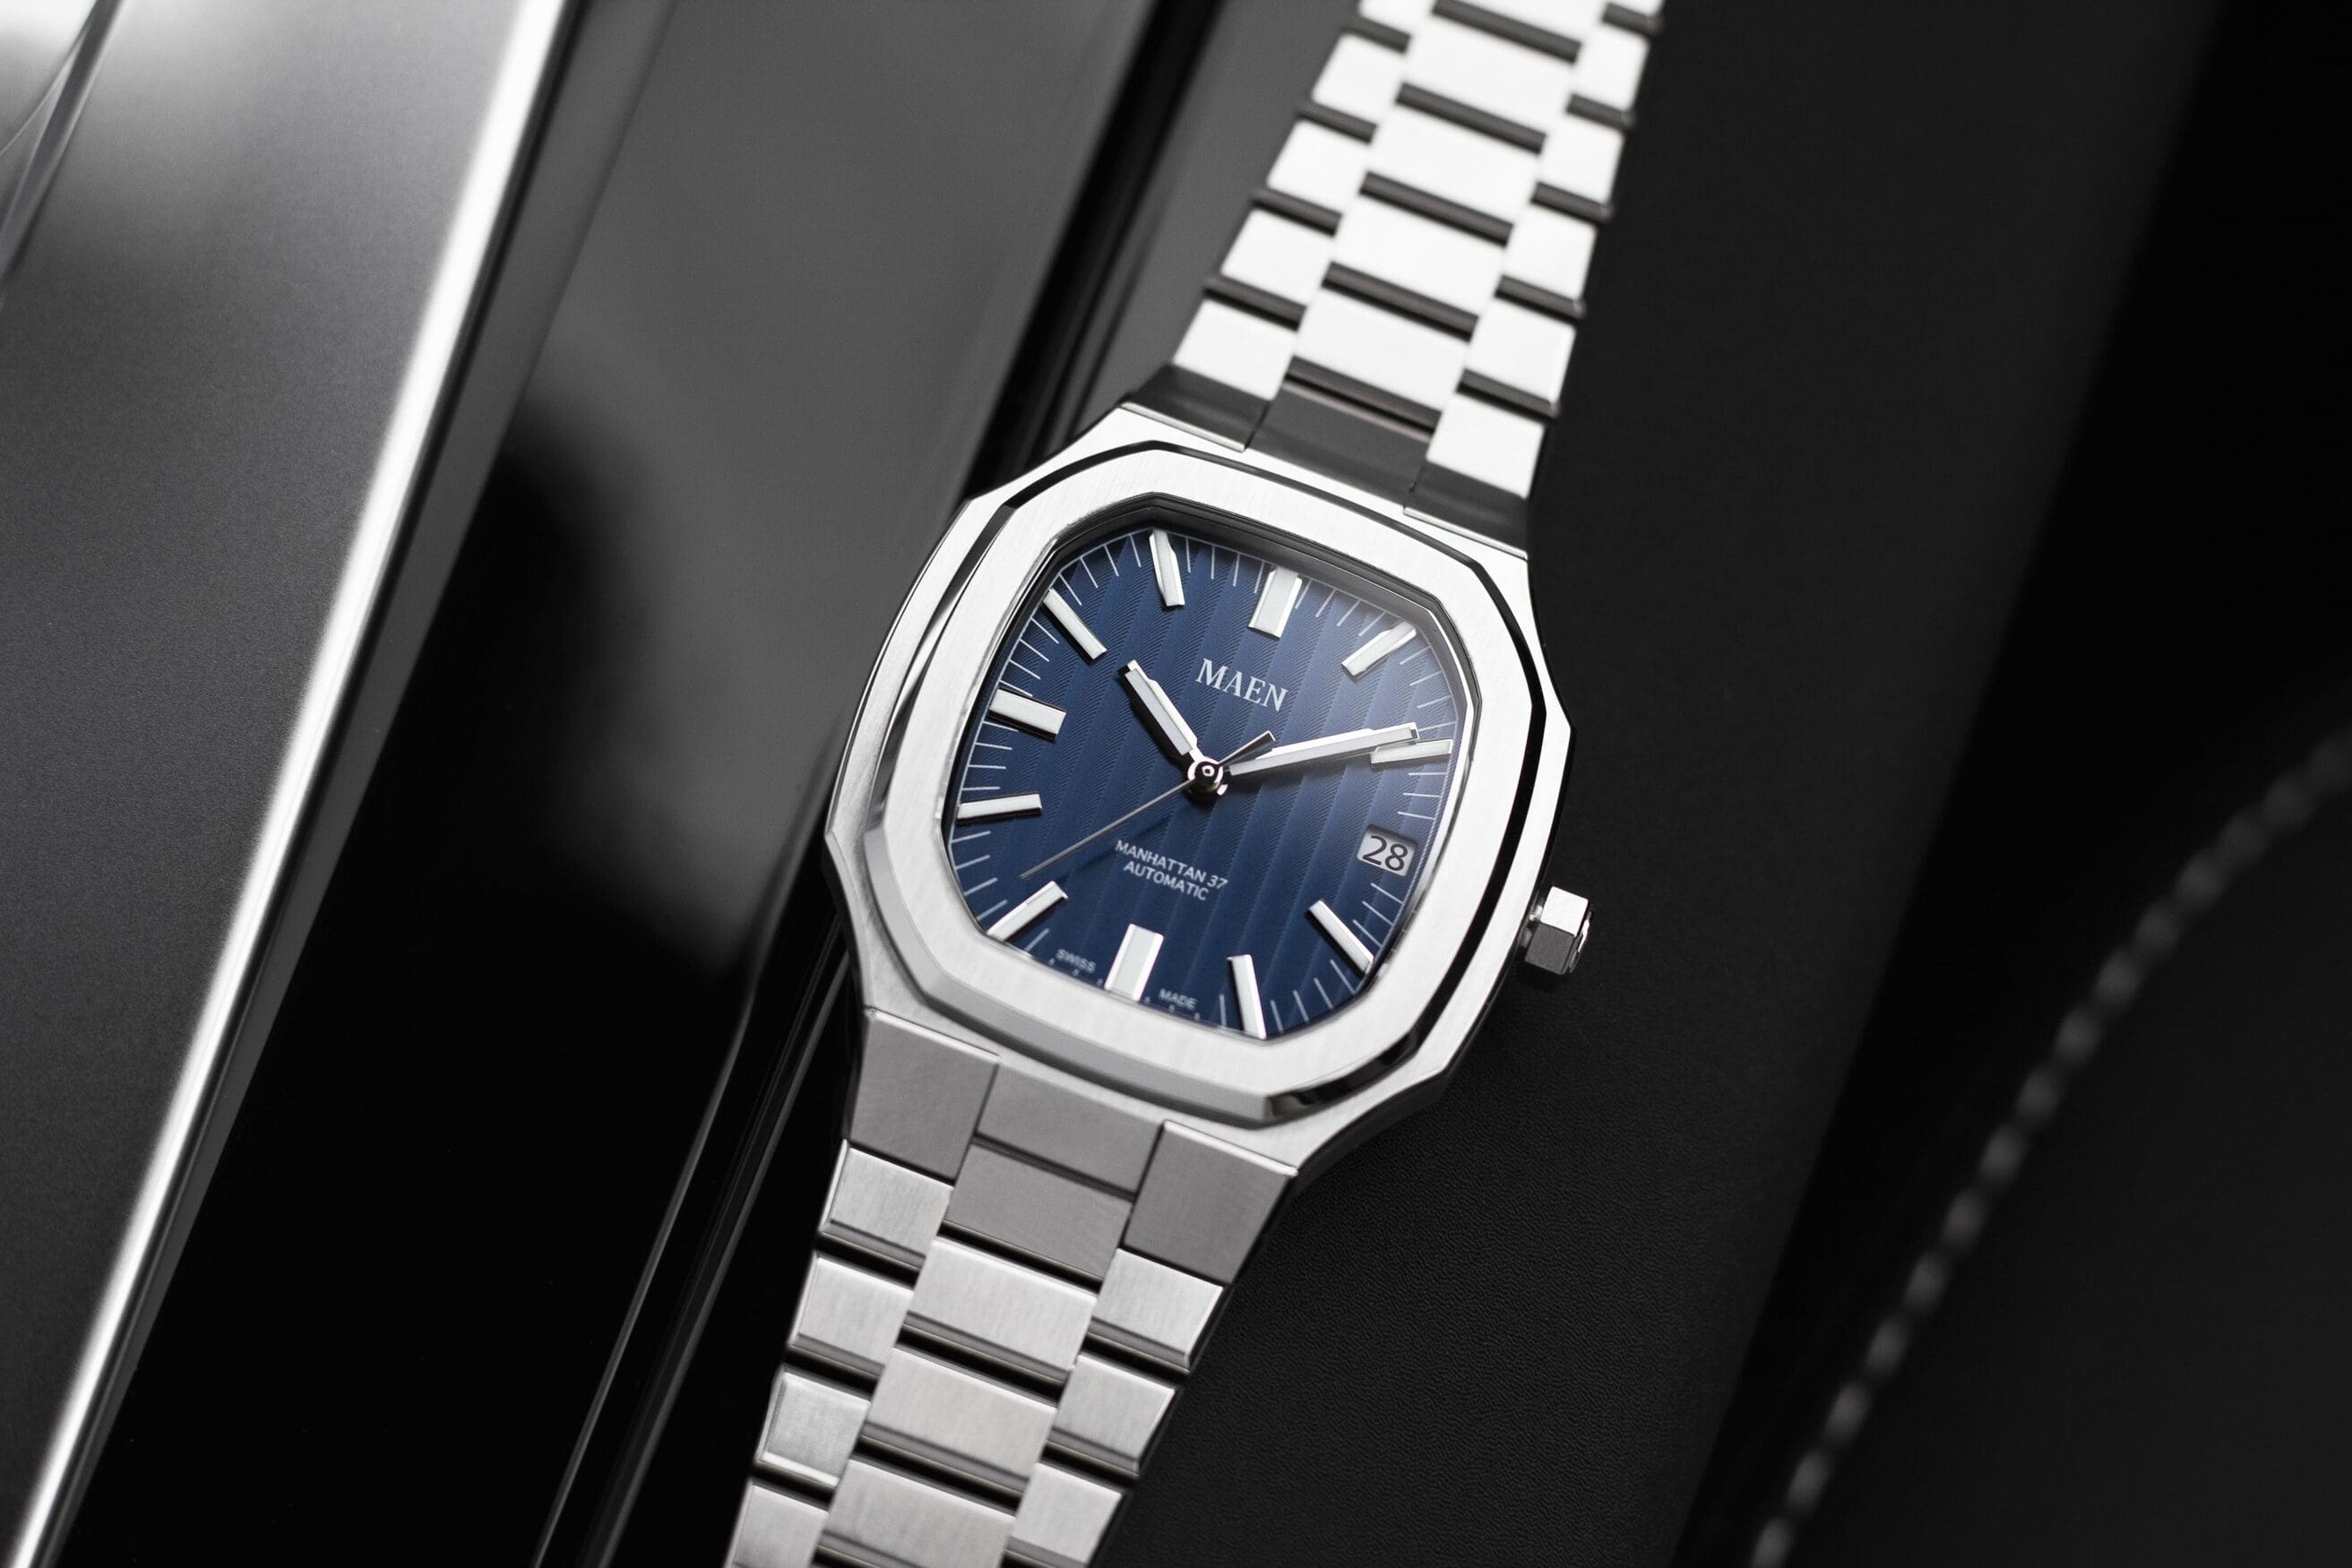 Maen Manhattan 37 is an integrated-bracelet watch at a great price